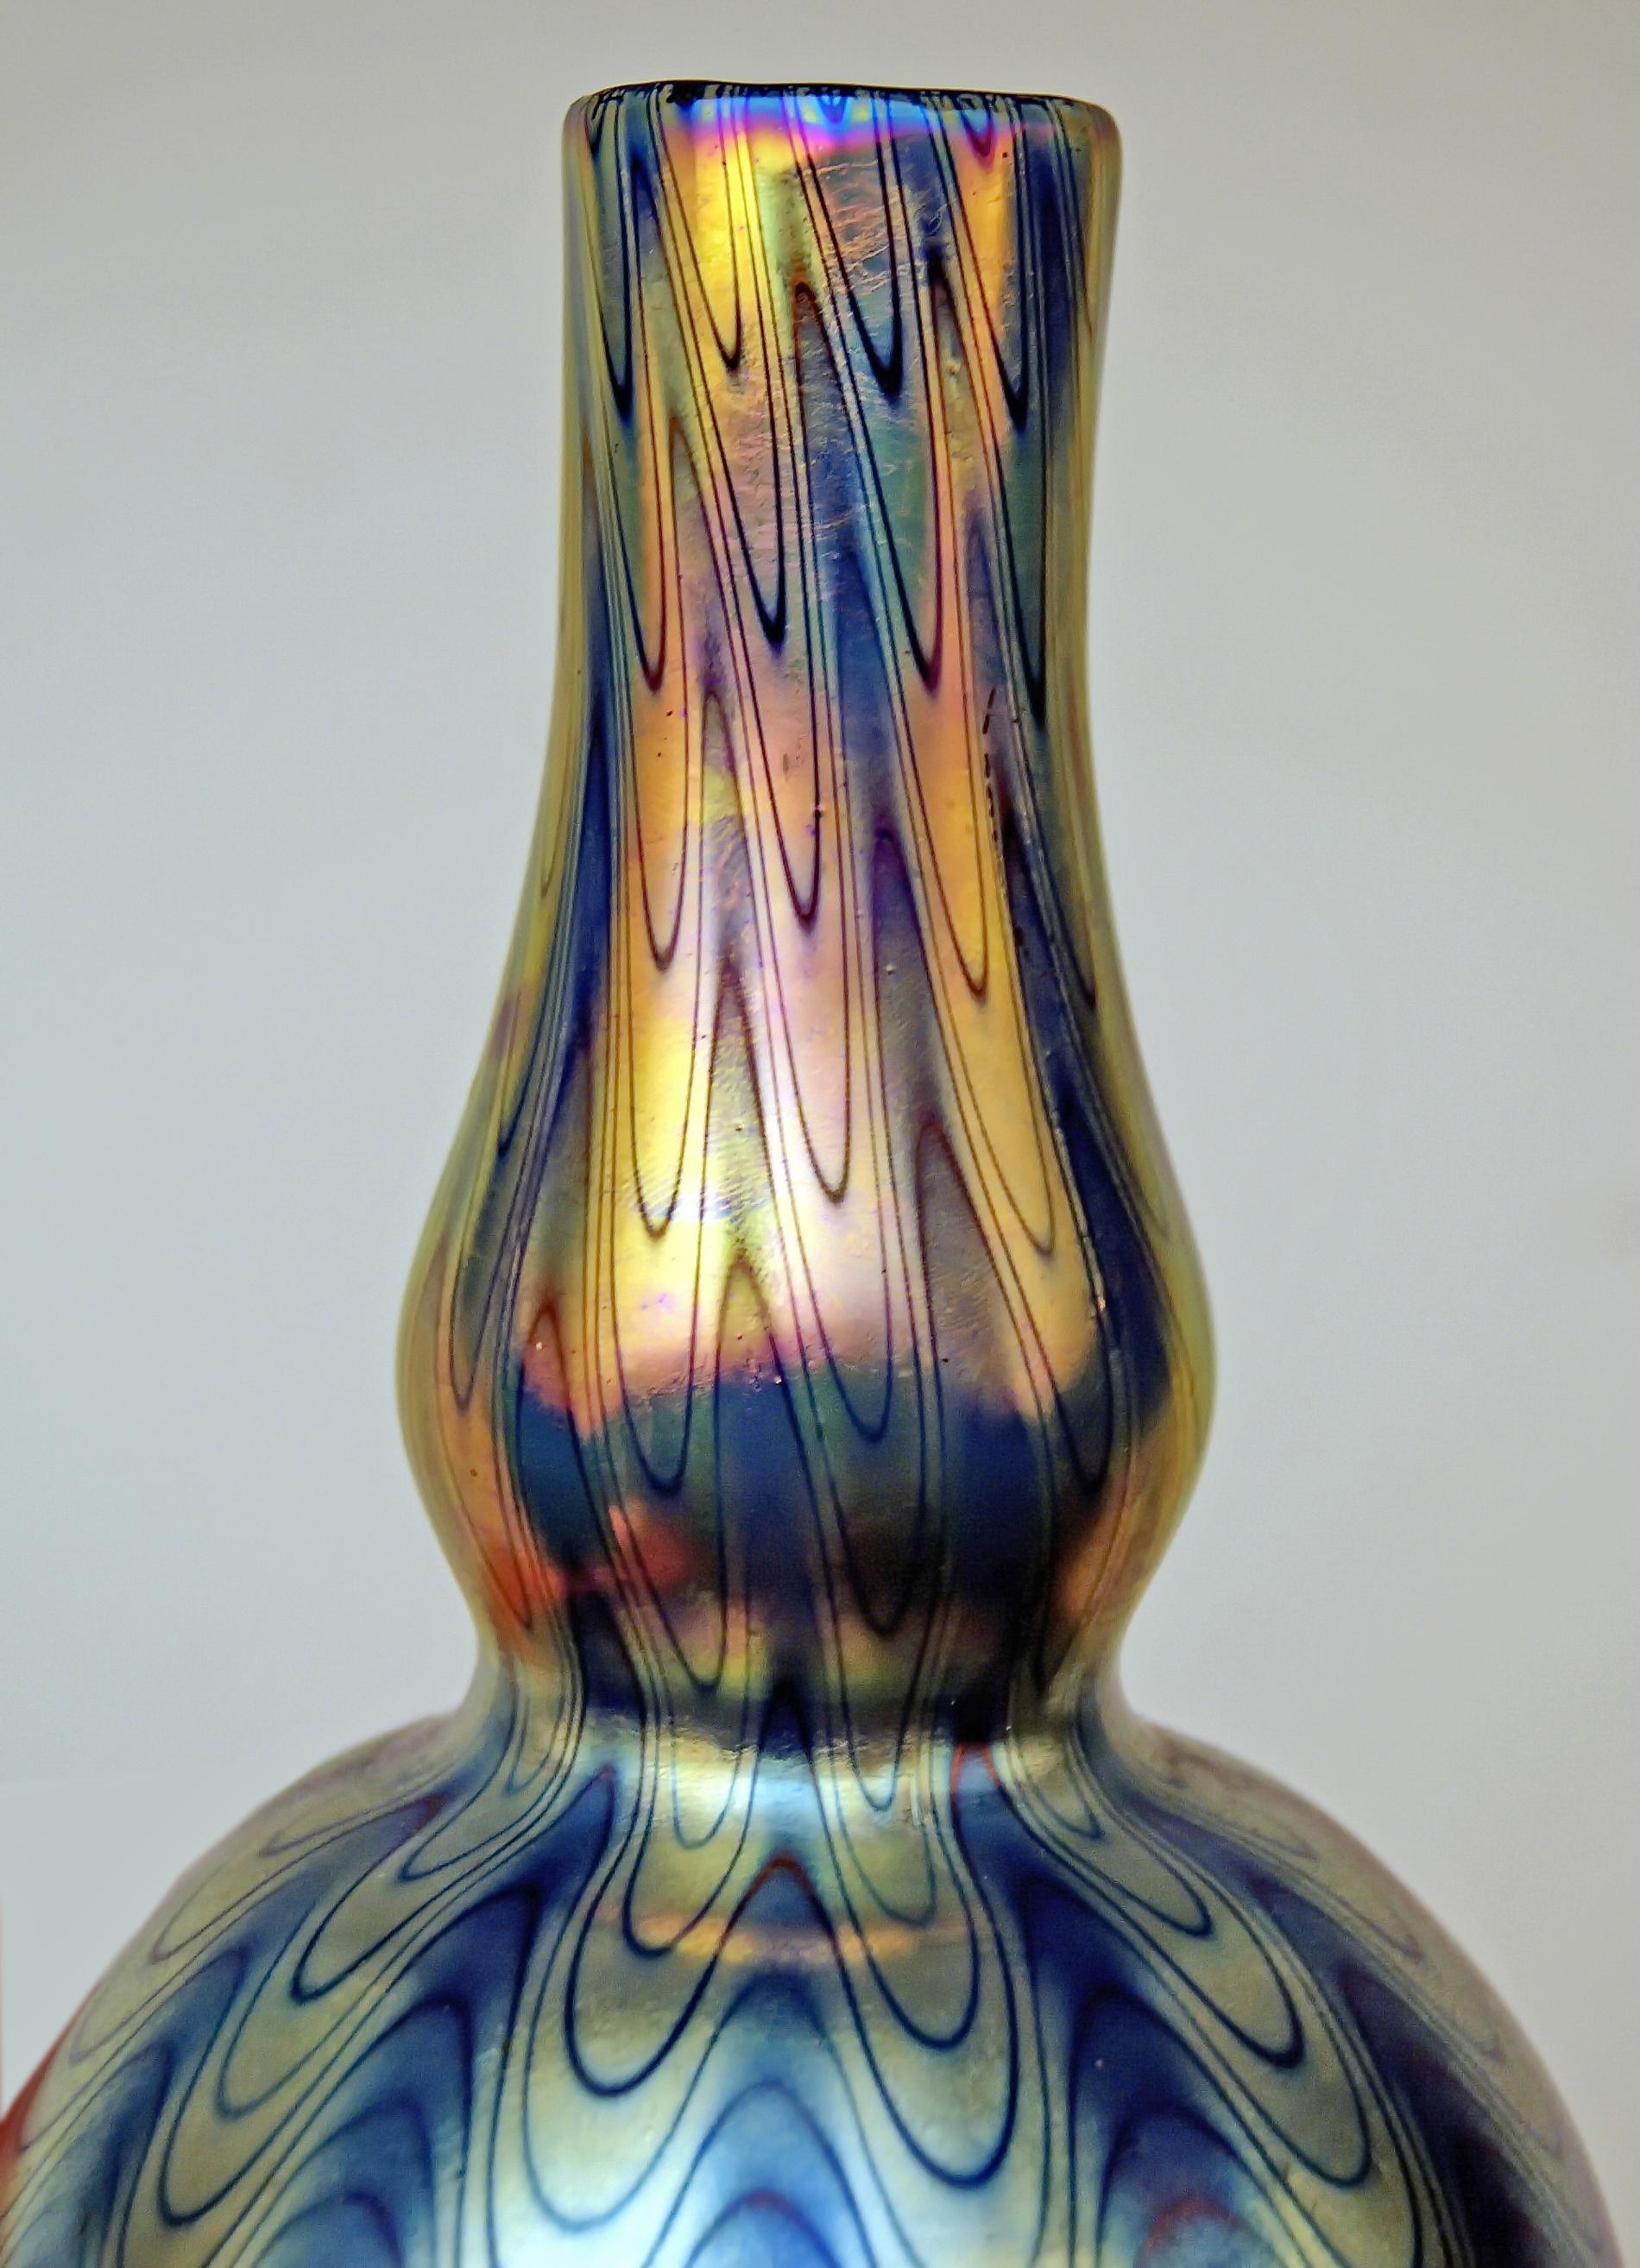 Glass Vase Bellied Loetz Widow Klostermuehle Bohemia Art Nouveau PG 6893, circa 1899